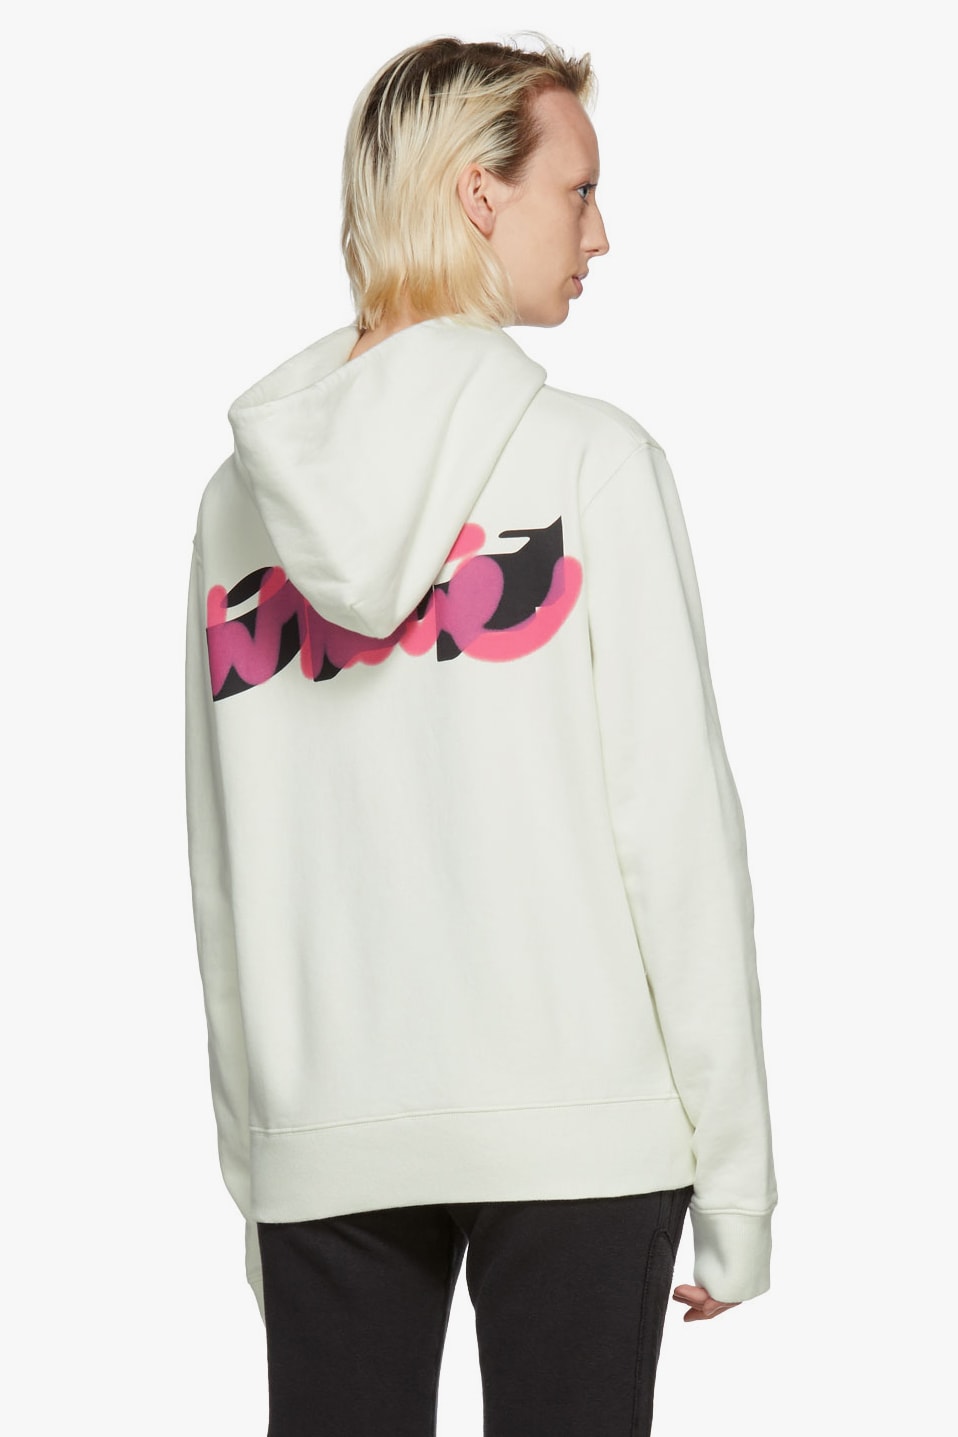 Shop New Off-White Spring Arrivals SSENSE Streetwear Staples Fashion Hoodie Sweatshirt Backpack Keychain